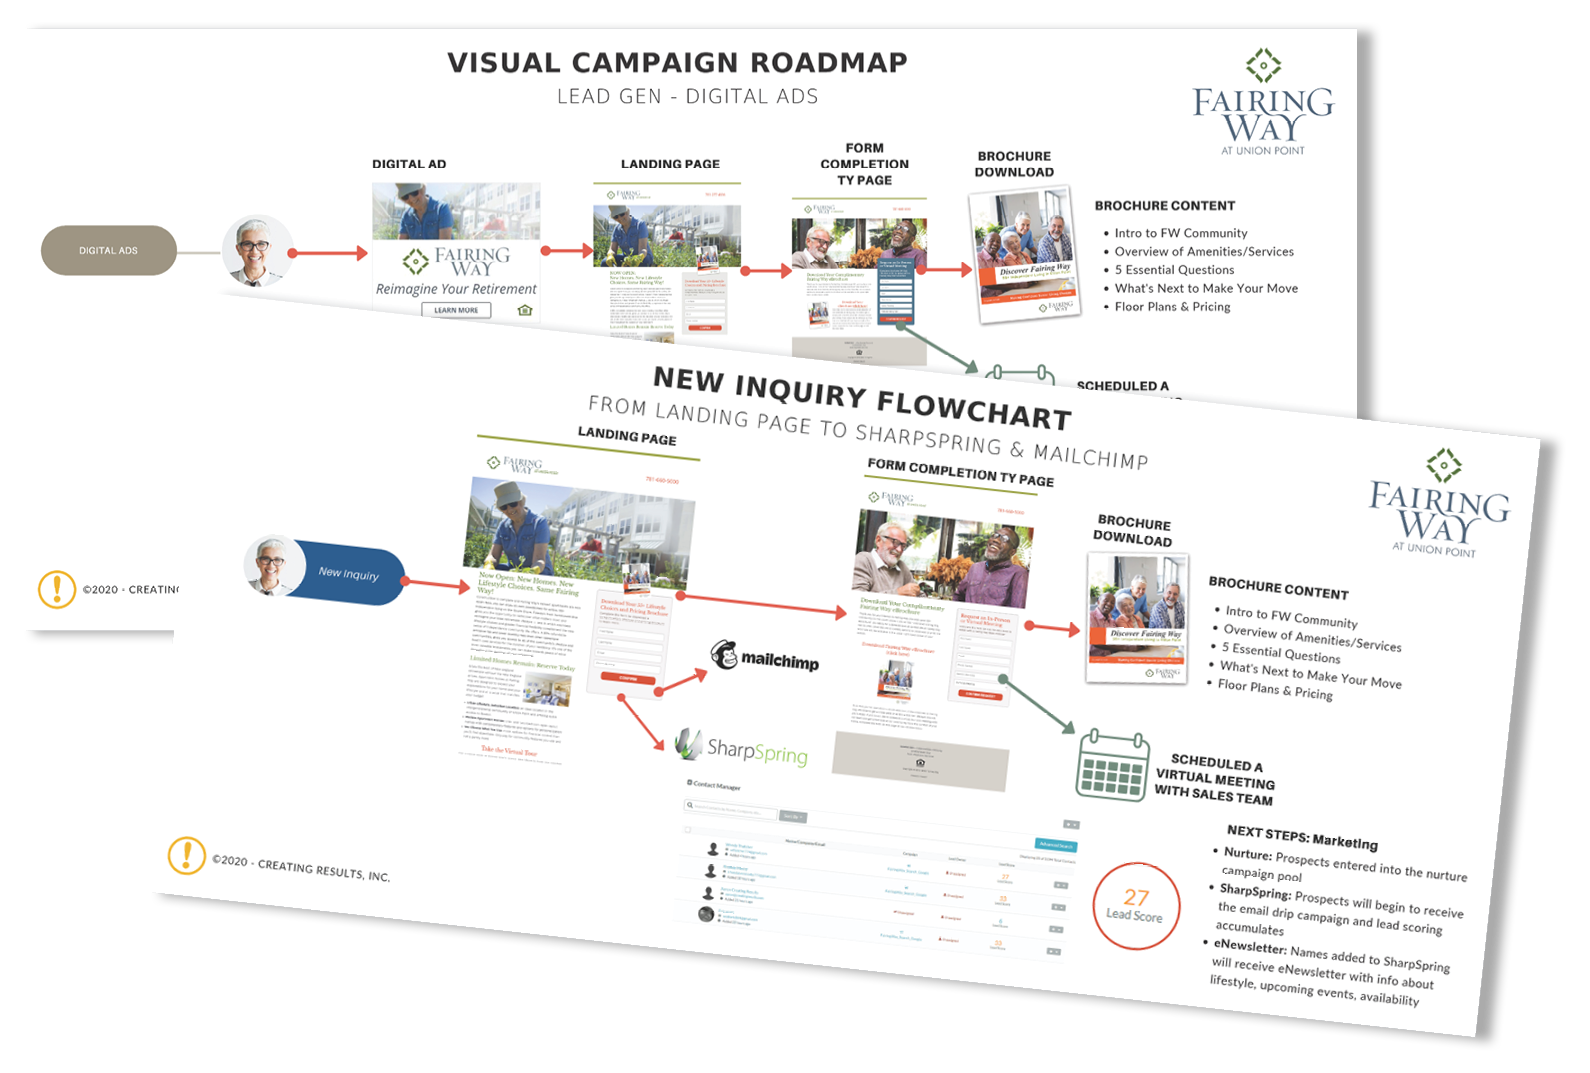 flowchart showing roadmap of marketing tactics for Fairing Way